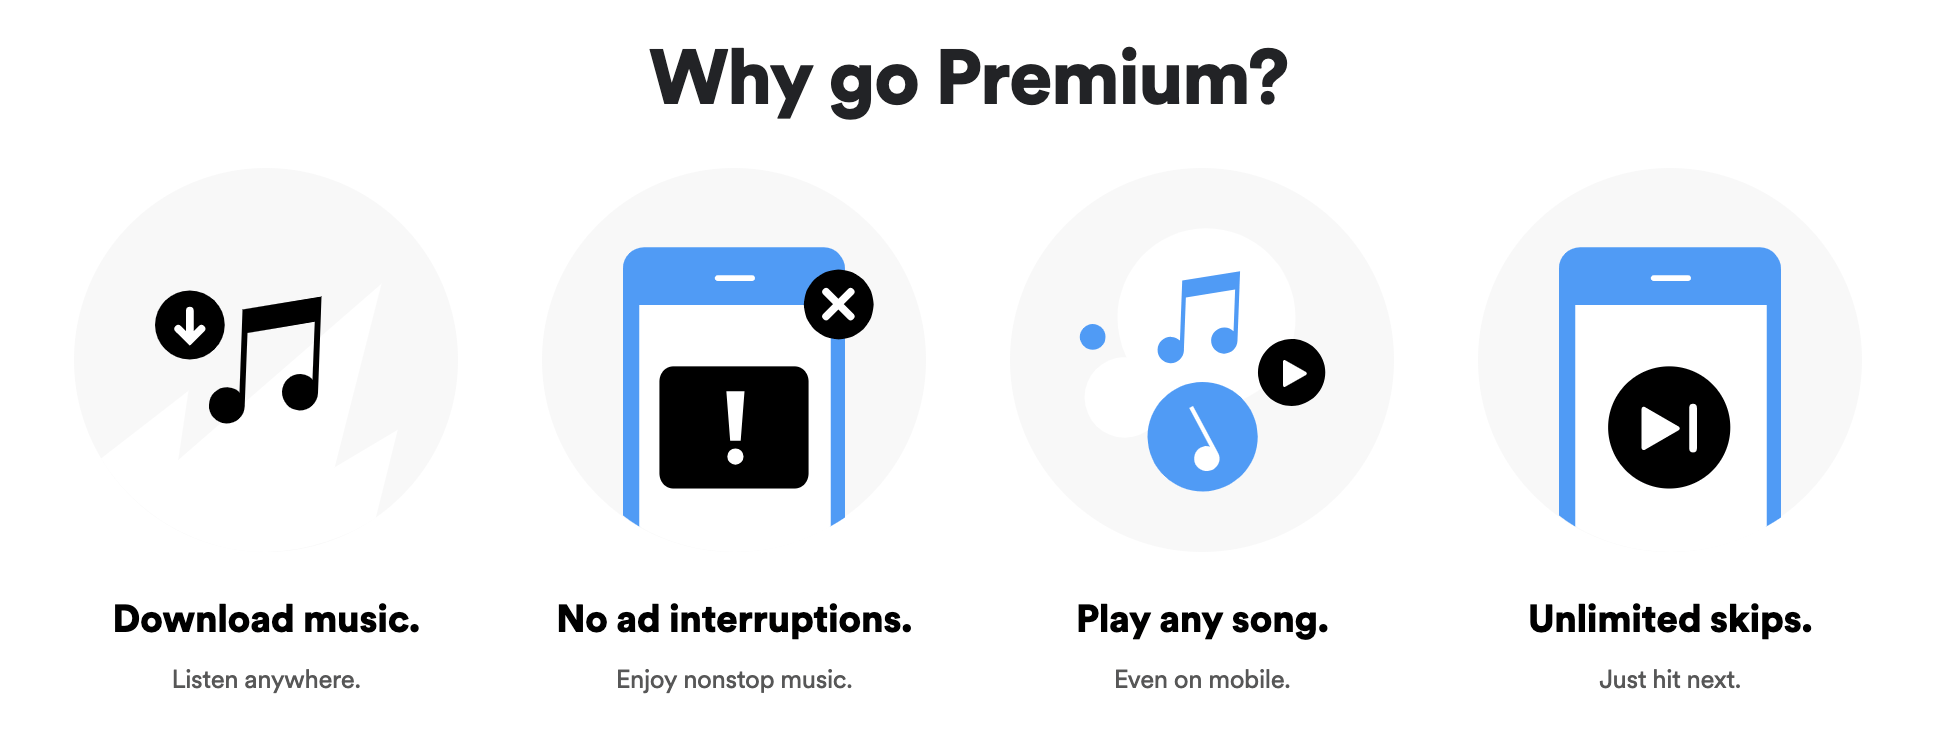 spotify premium 3 months